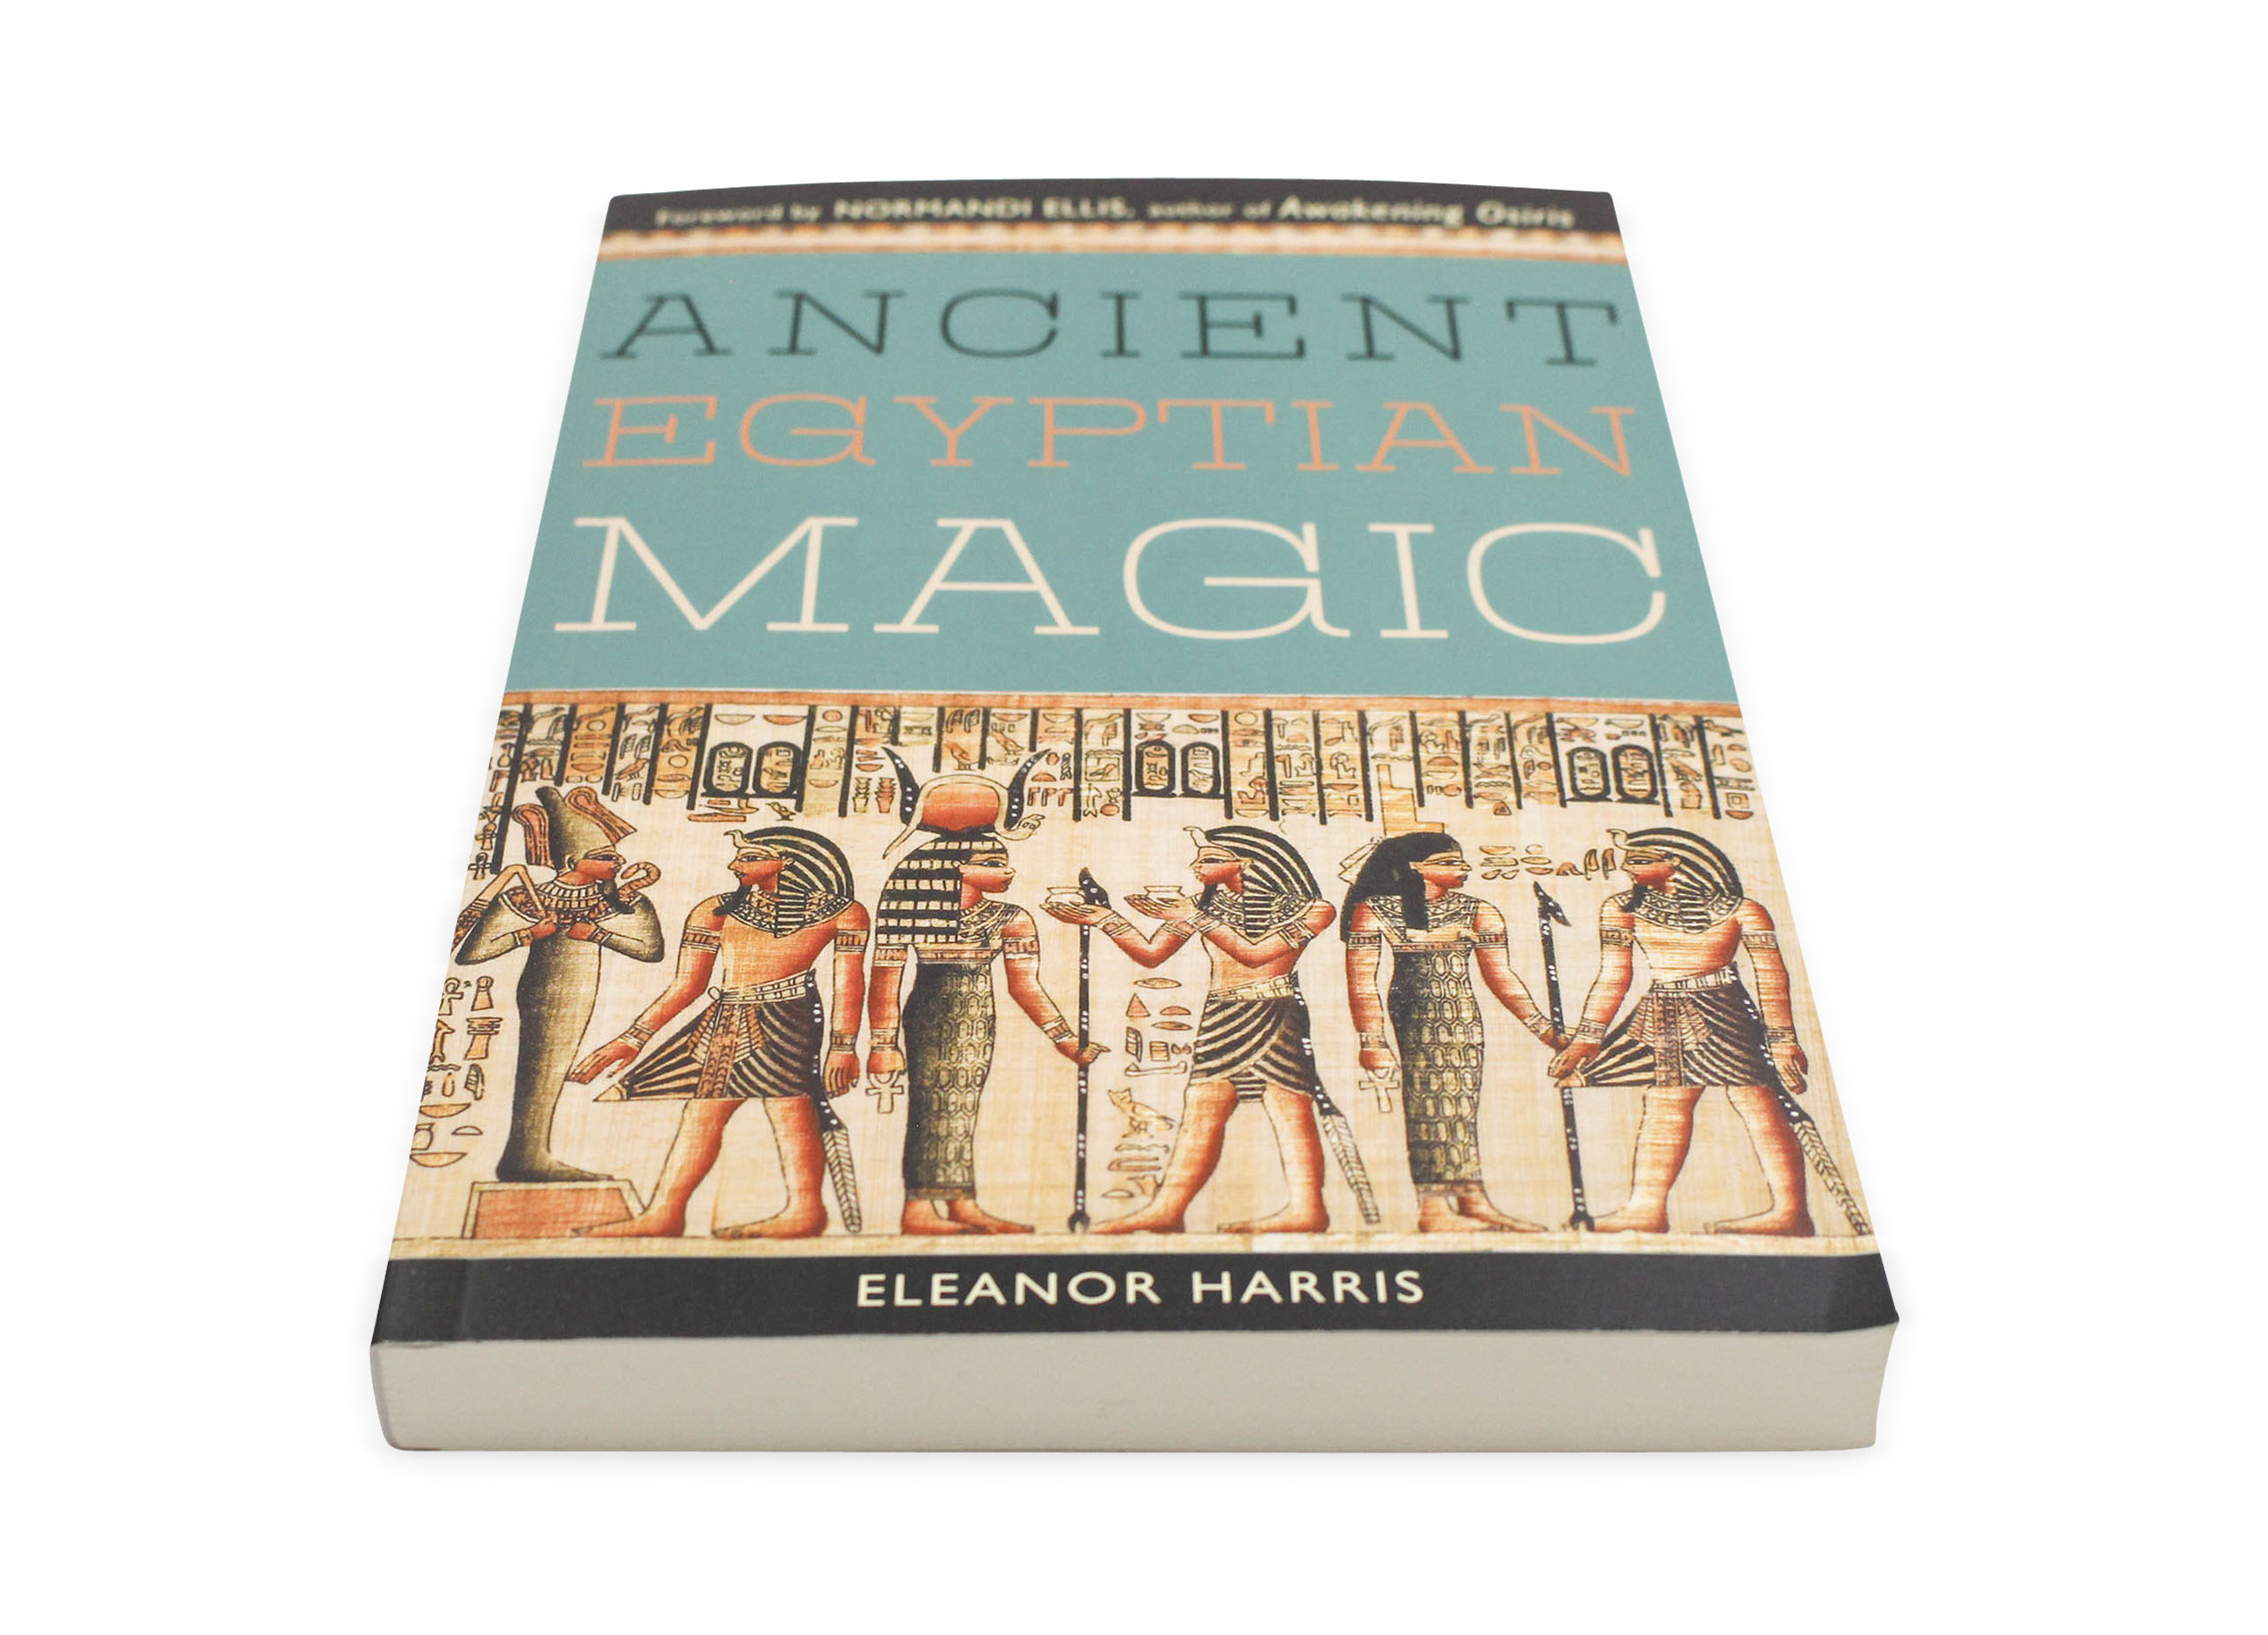 Ancient Egyptian Magic Book - Crystal Dreams